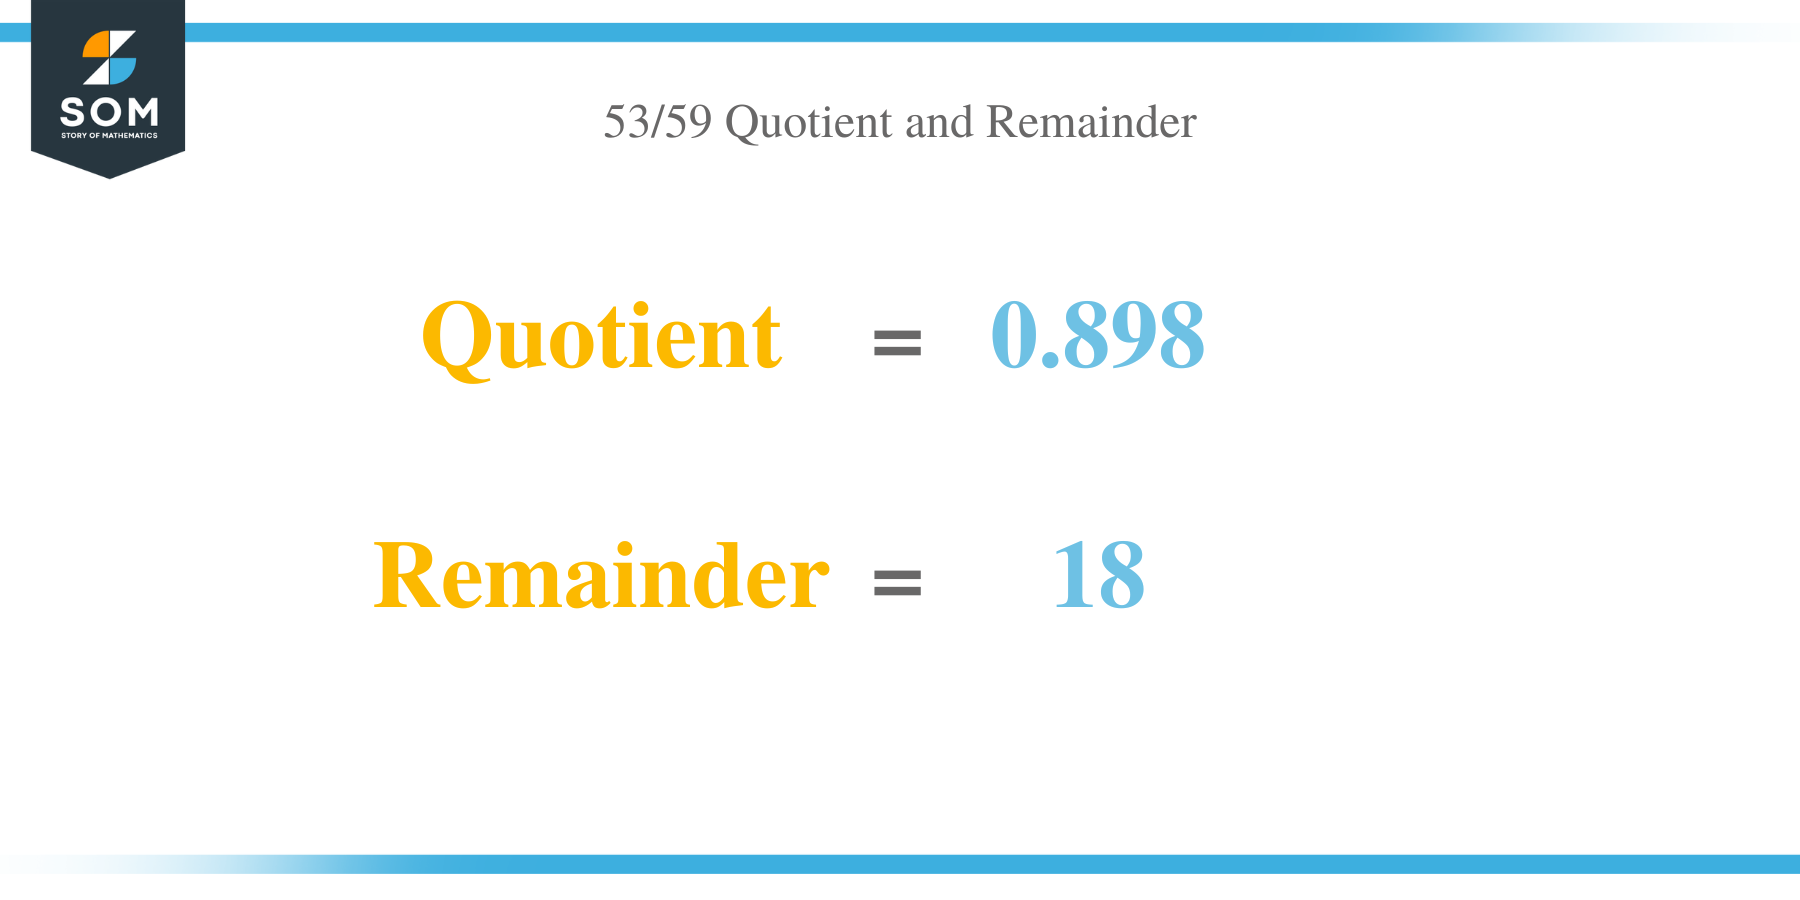 Quotient and Remainder of 53 per 59